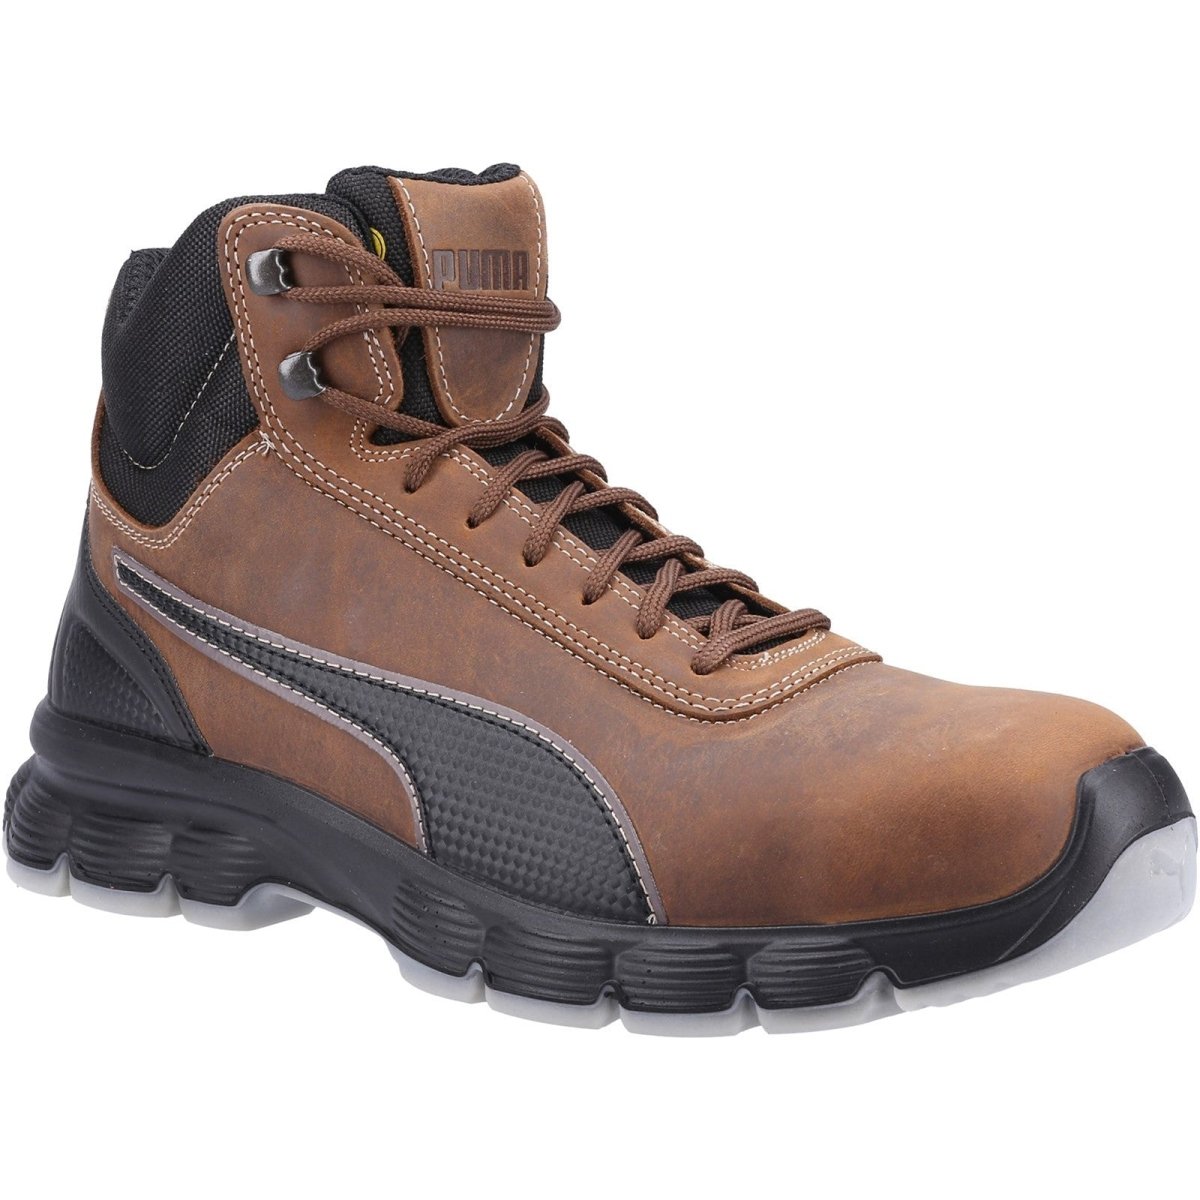 Puma Condor Mid Steel Toe Cap Mens Safety Boots - Shoe Store Direct